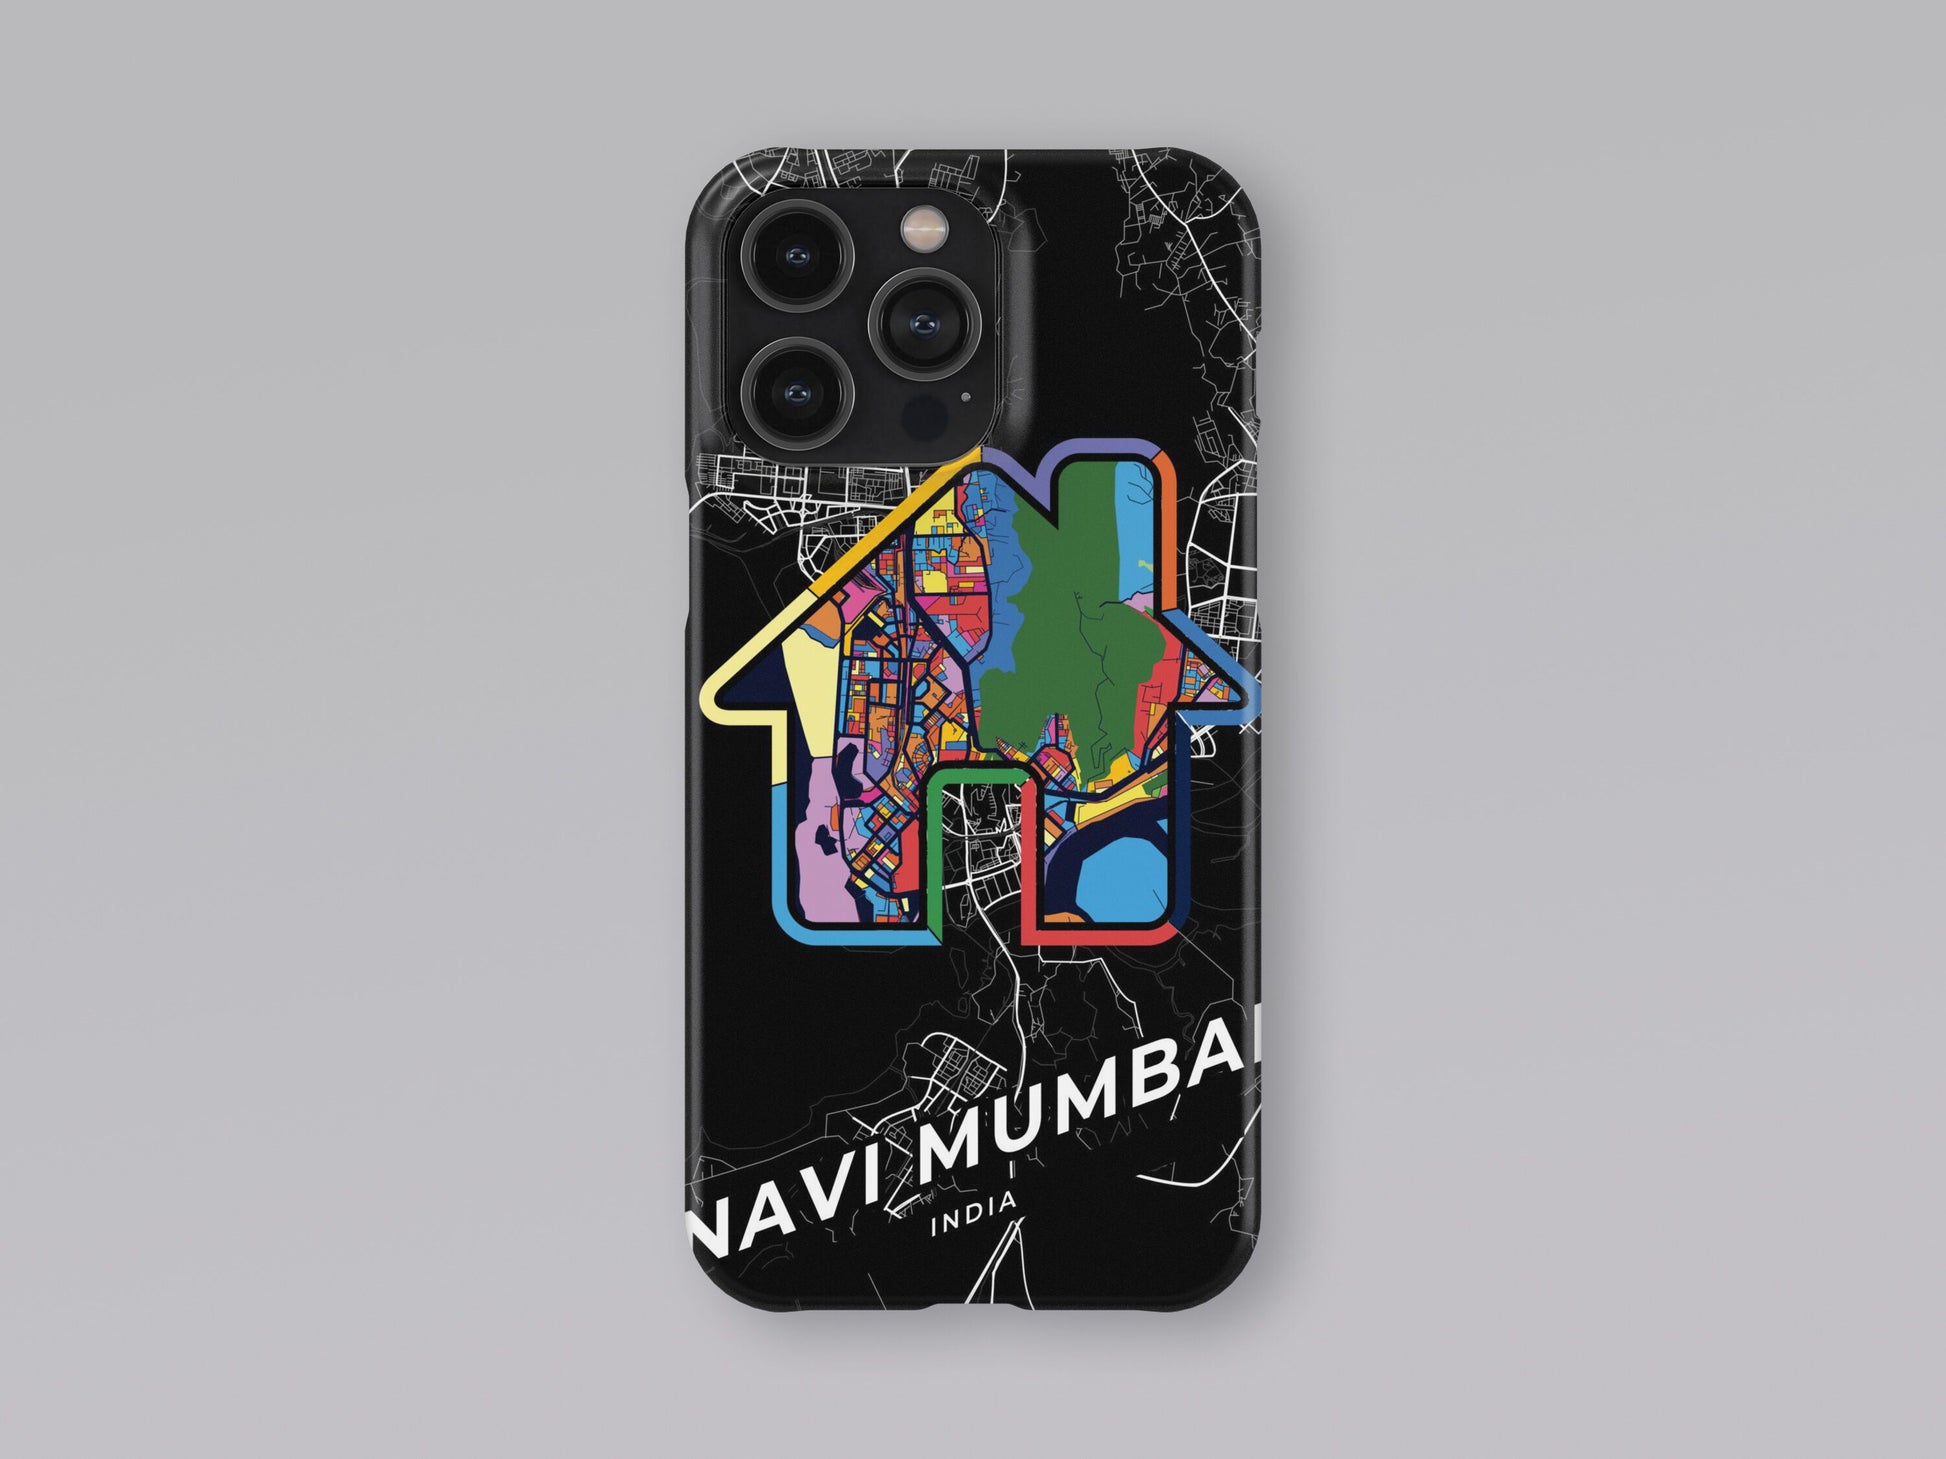 Navi Mumbai India slim phone case with colorful icon 3